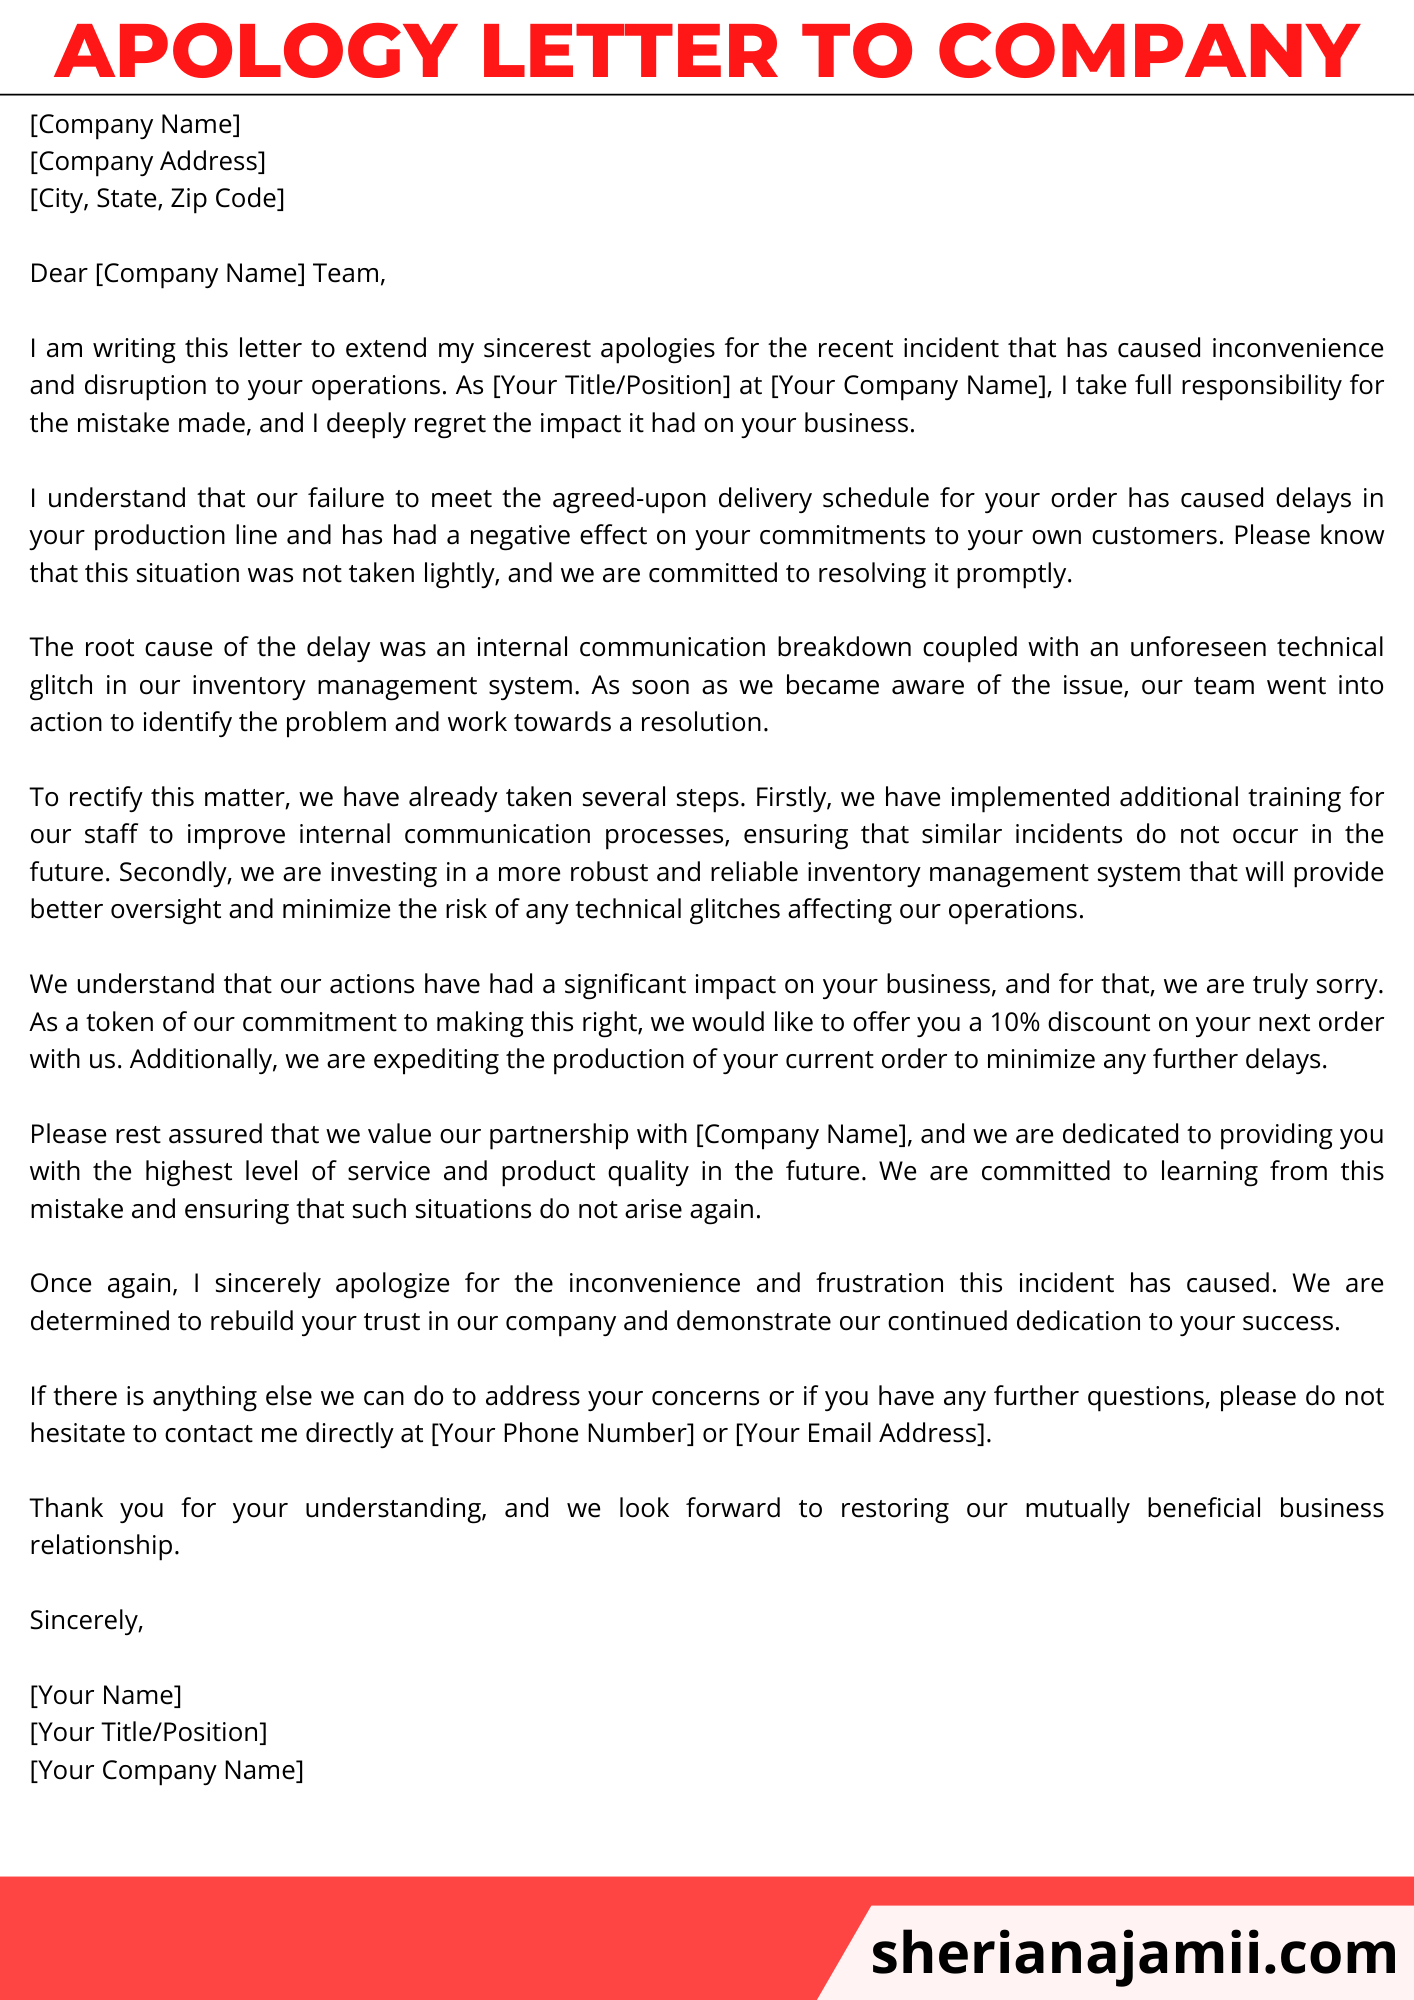 apology letter to company, apology letter to company sample